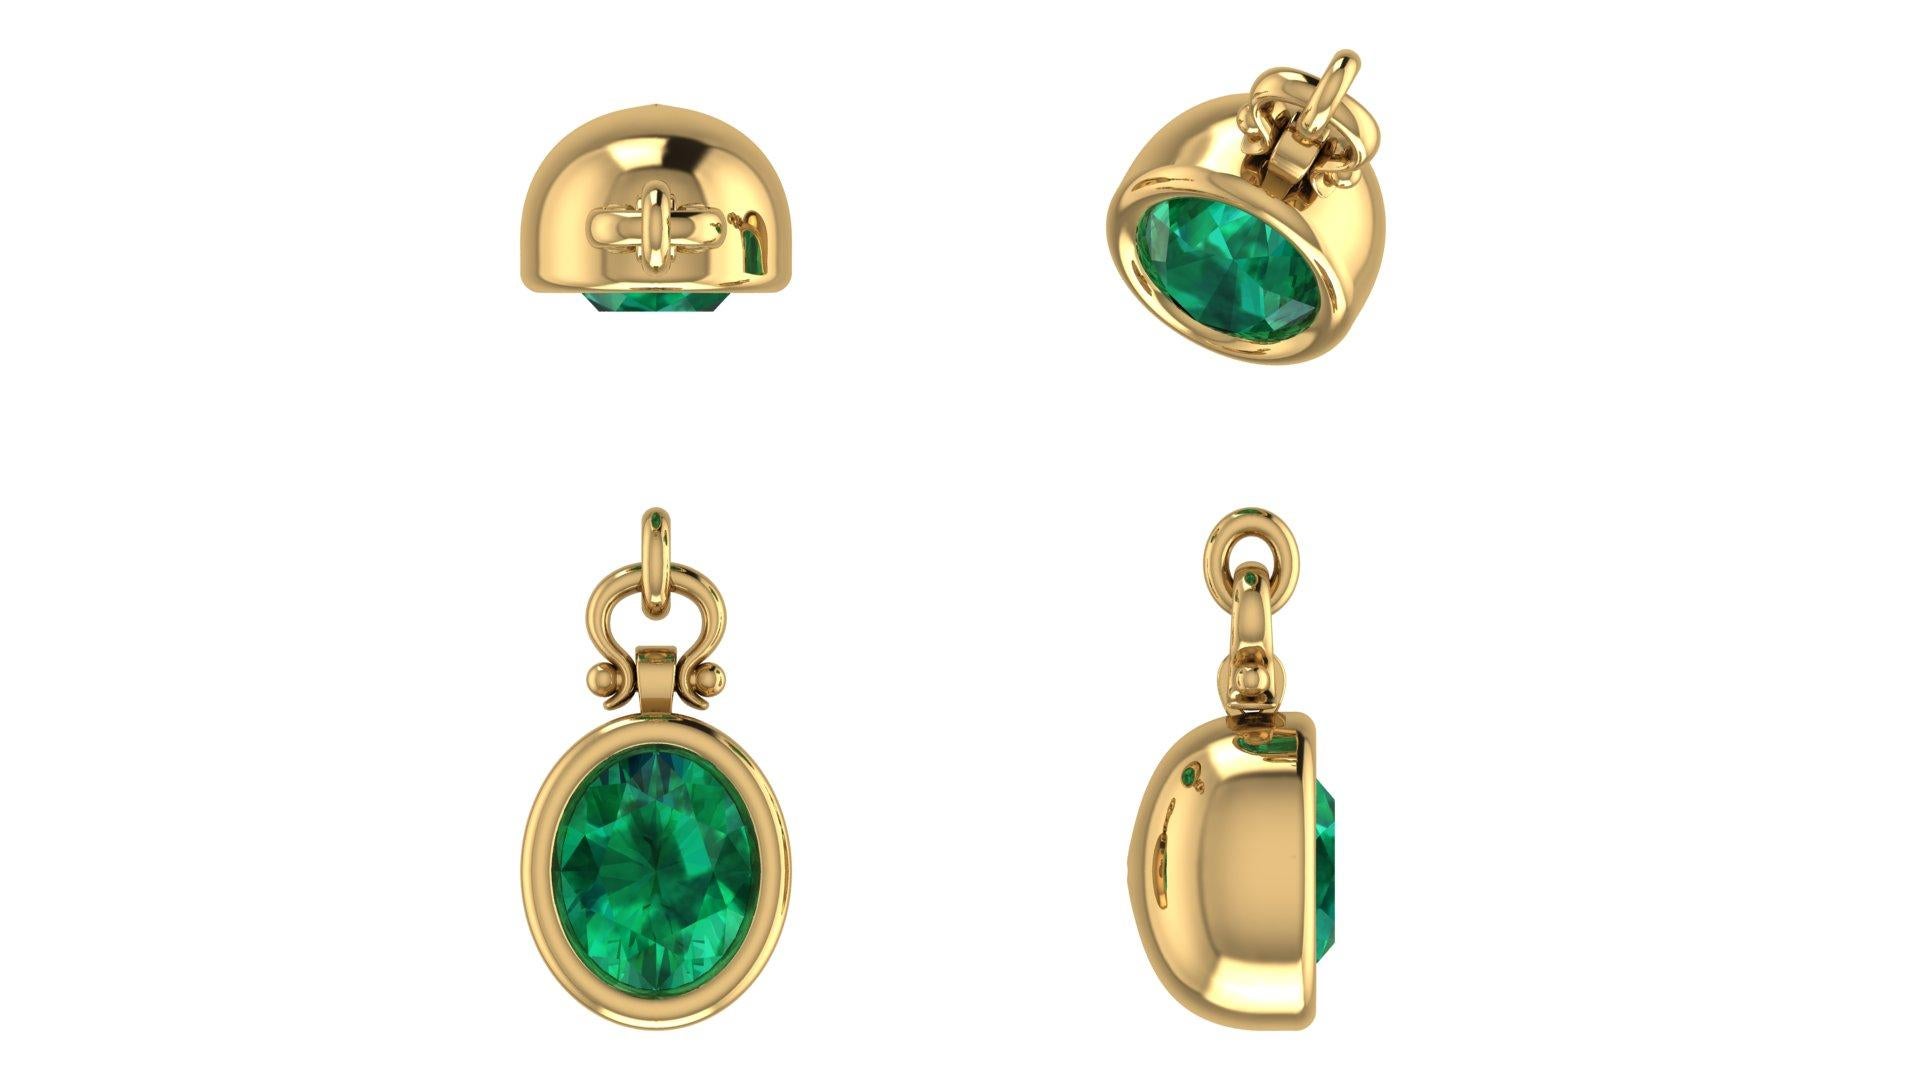 IGITL Certified 2.48 Carat Oval Cut Emerald Pendant Necklace in 18k For Sale 2